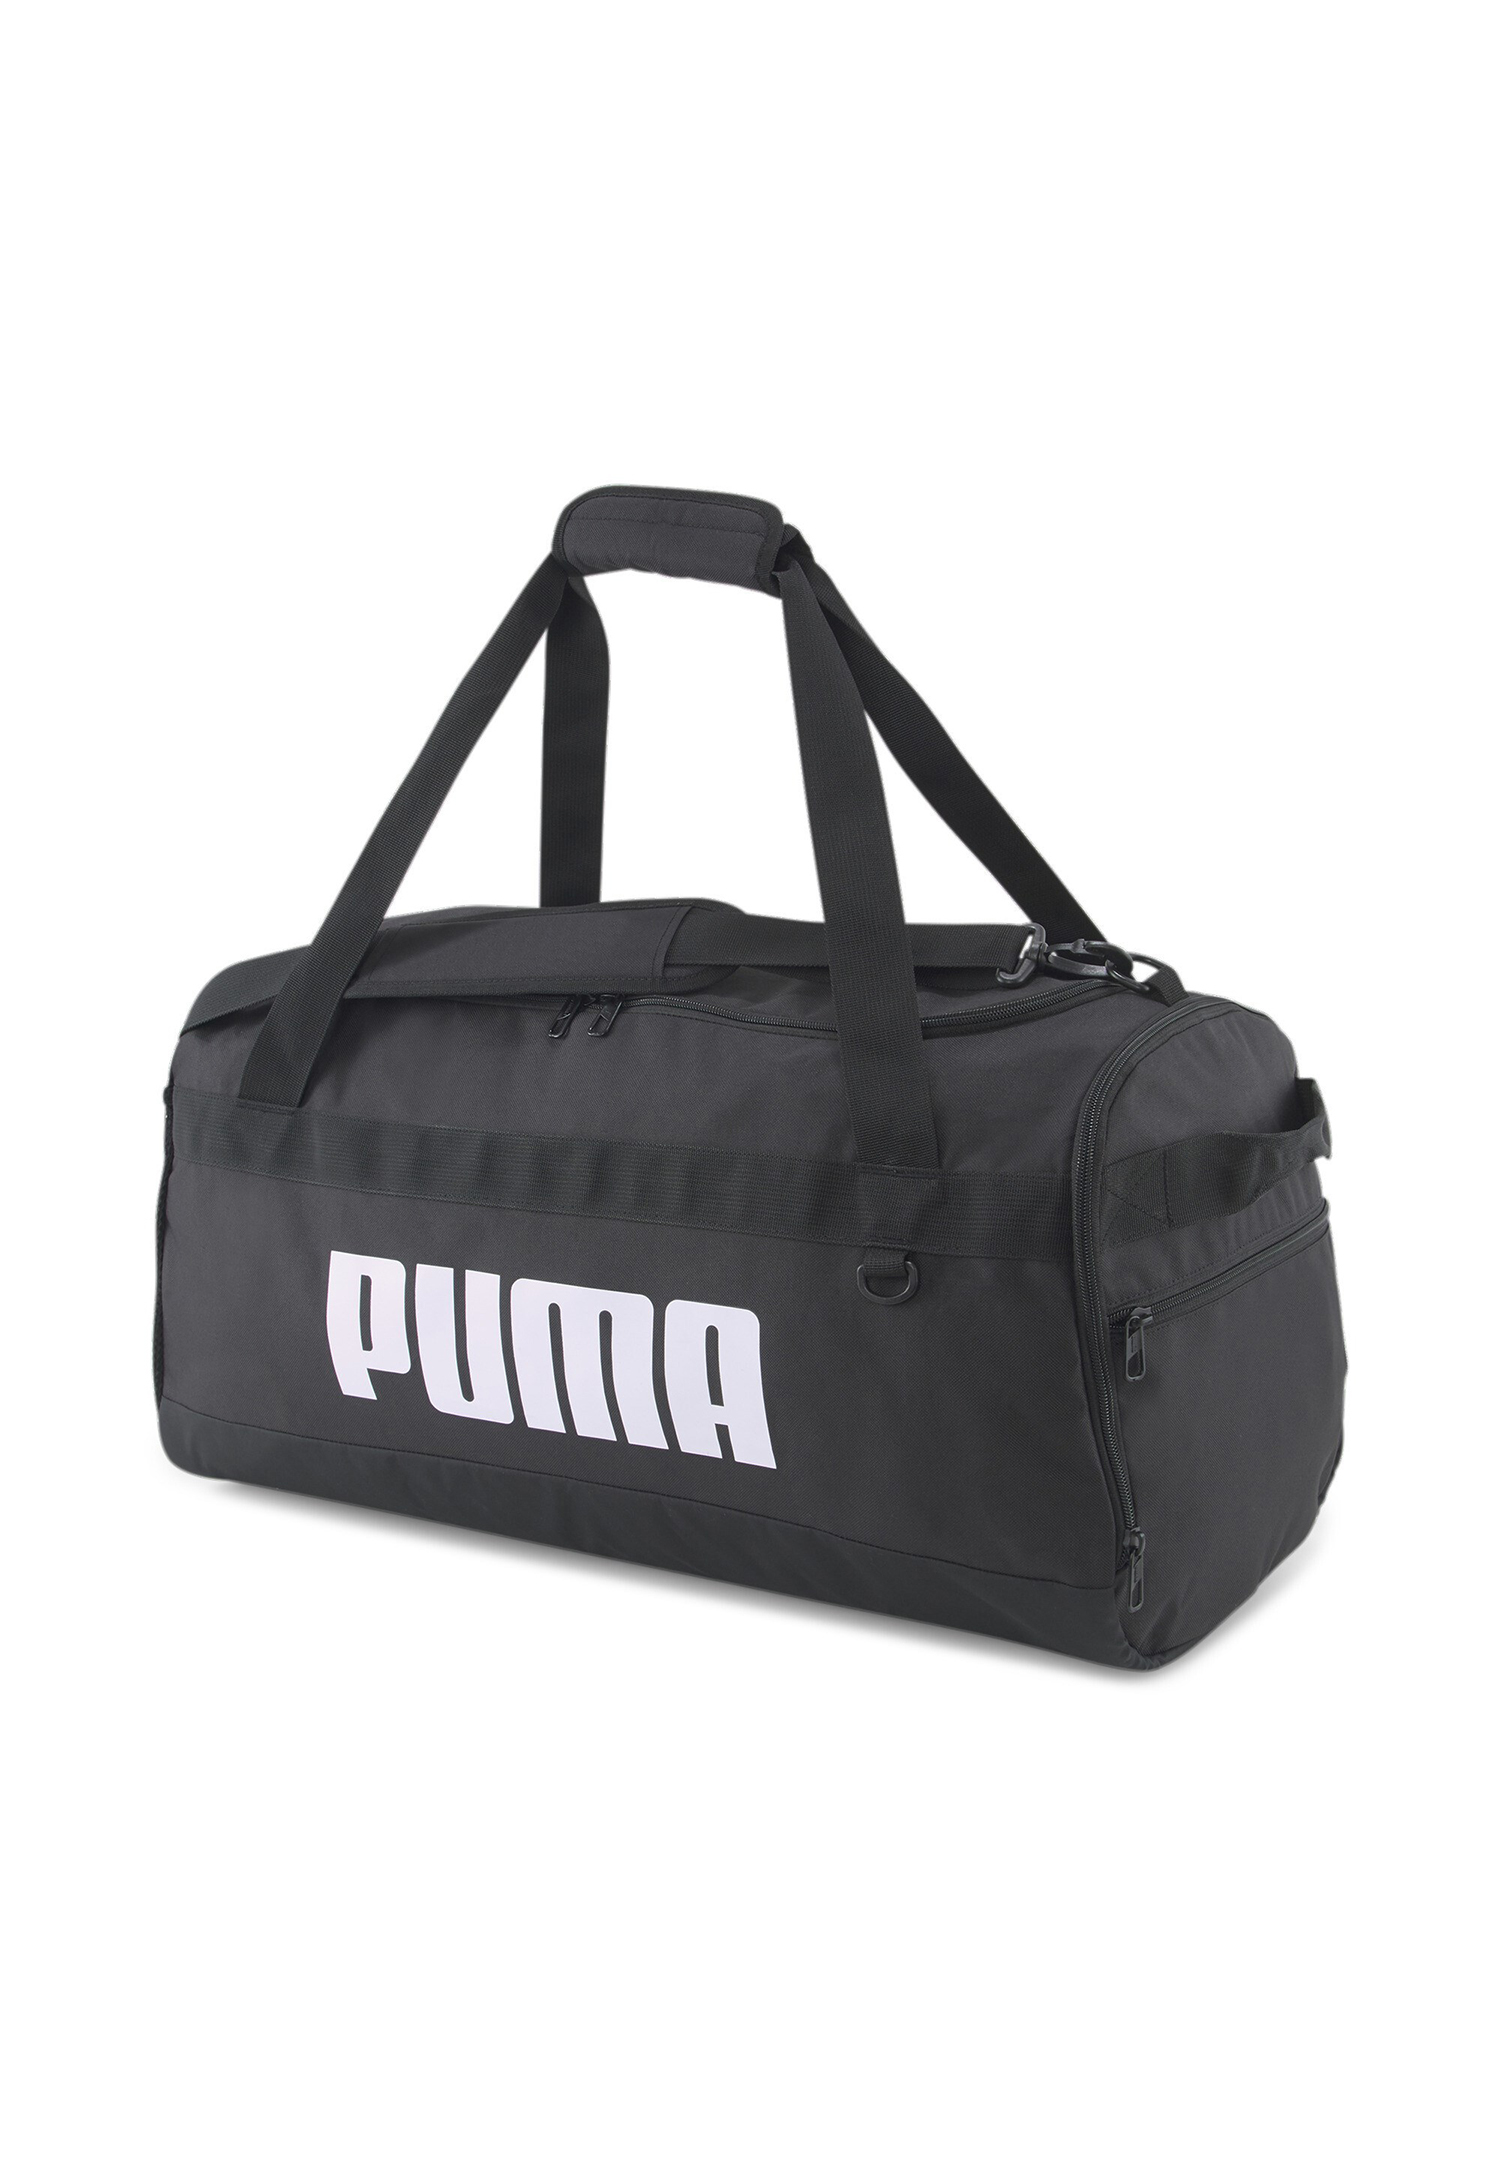 Puma Challenger Duffel Bag M 58L Sporttasche 79531 Schwarz 